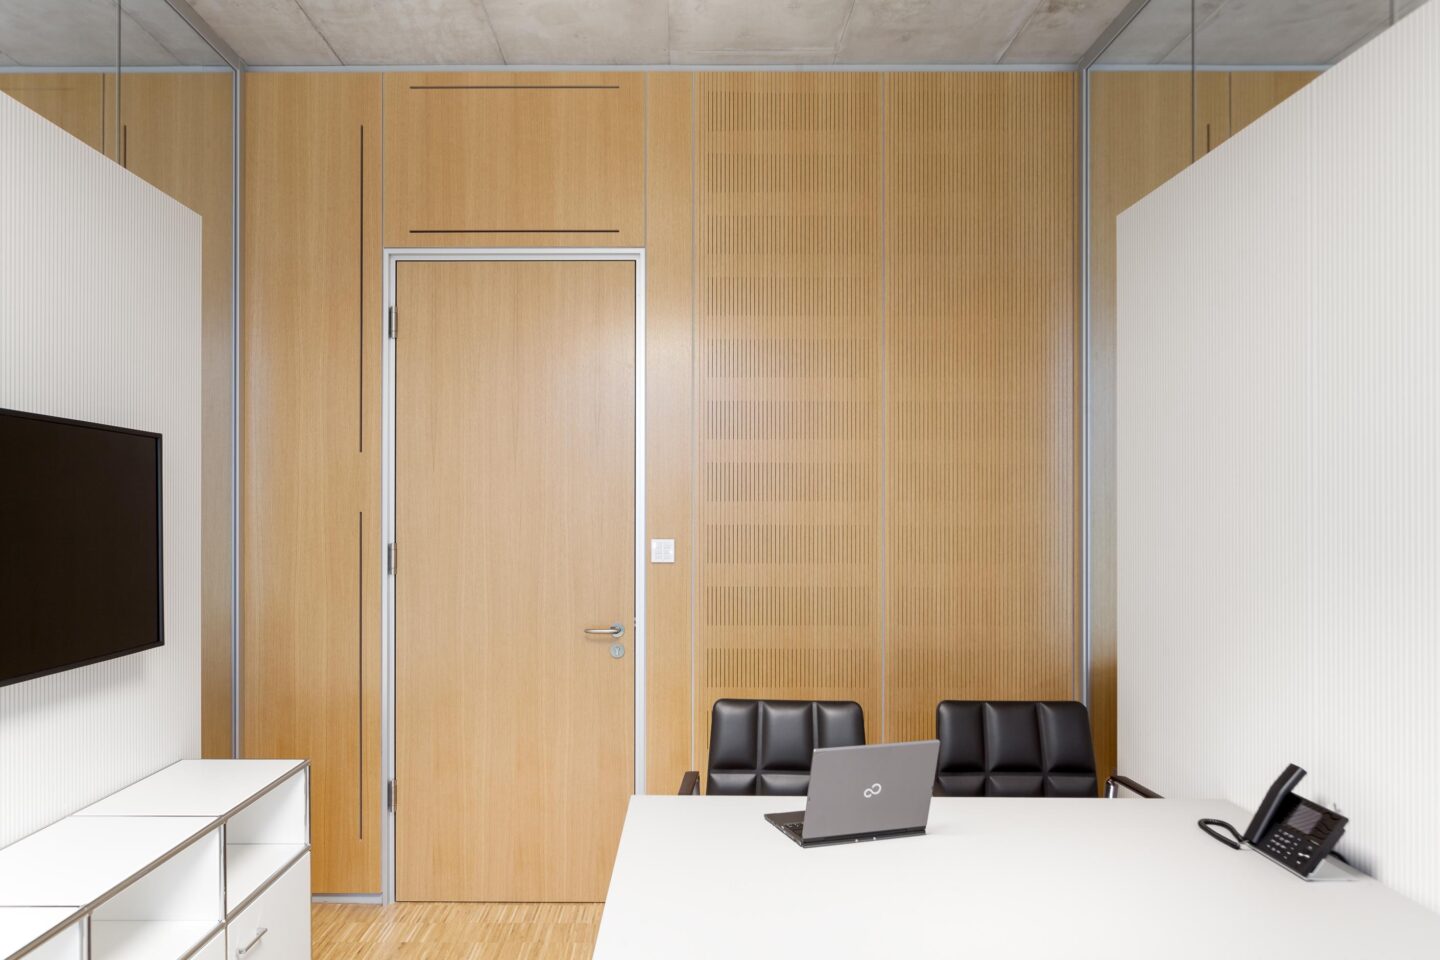 Karl Köhler GmbH │ system walls from feoco │ wooden door elements